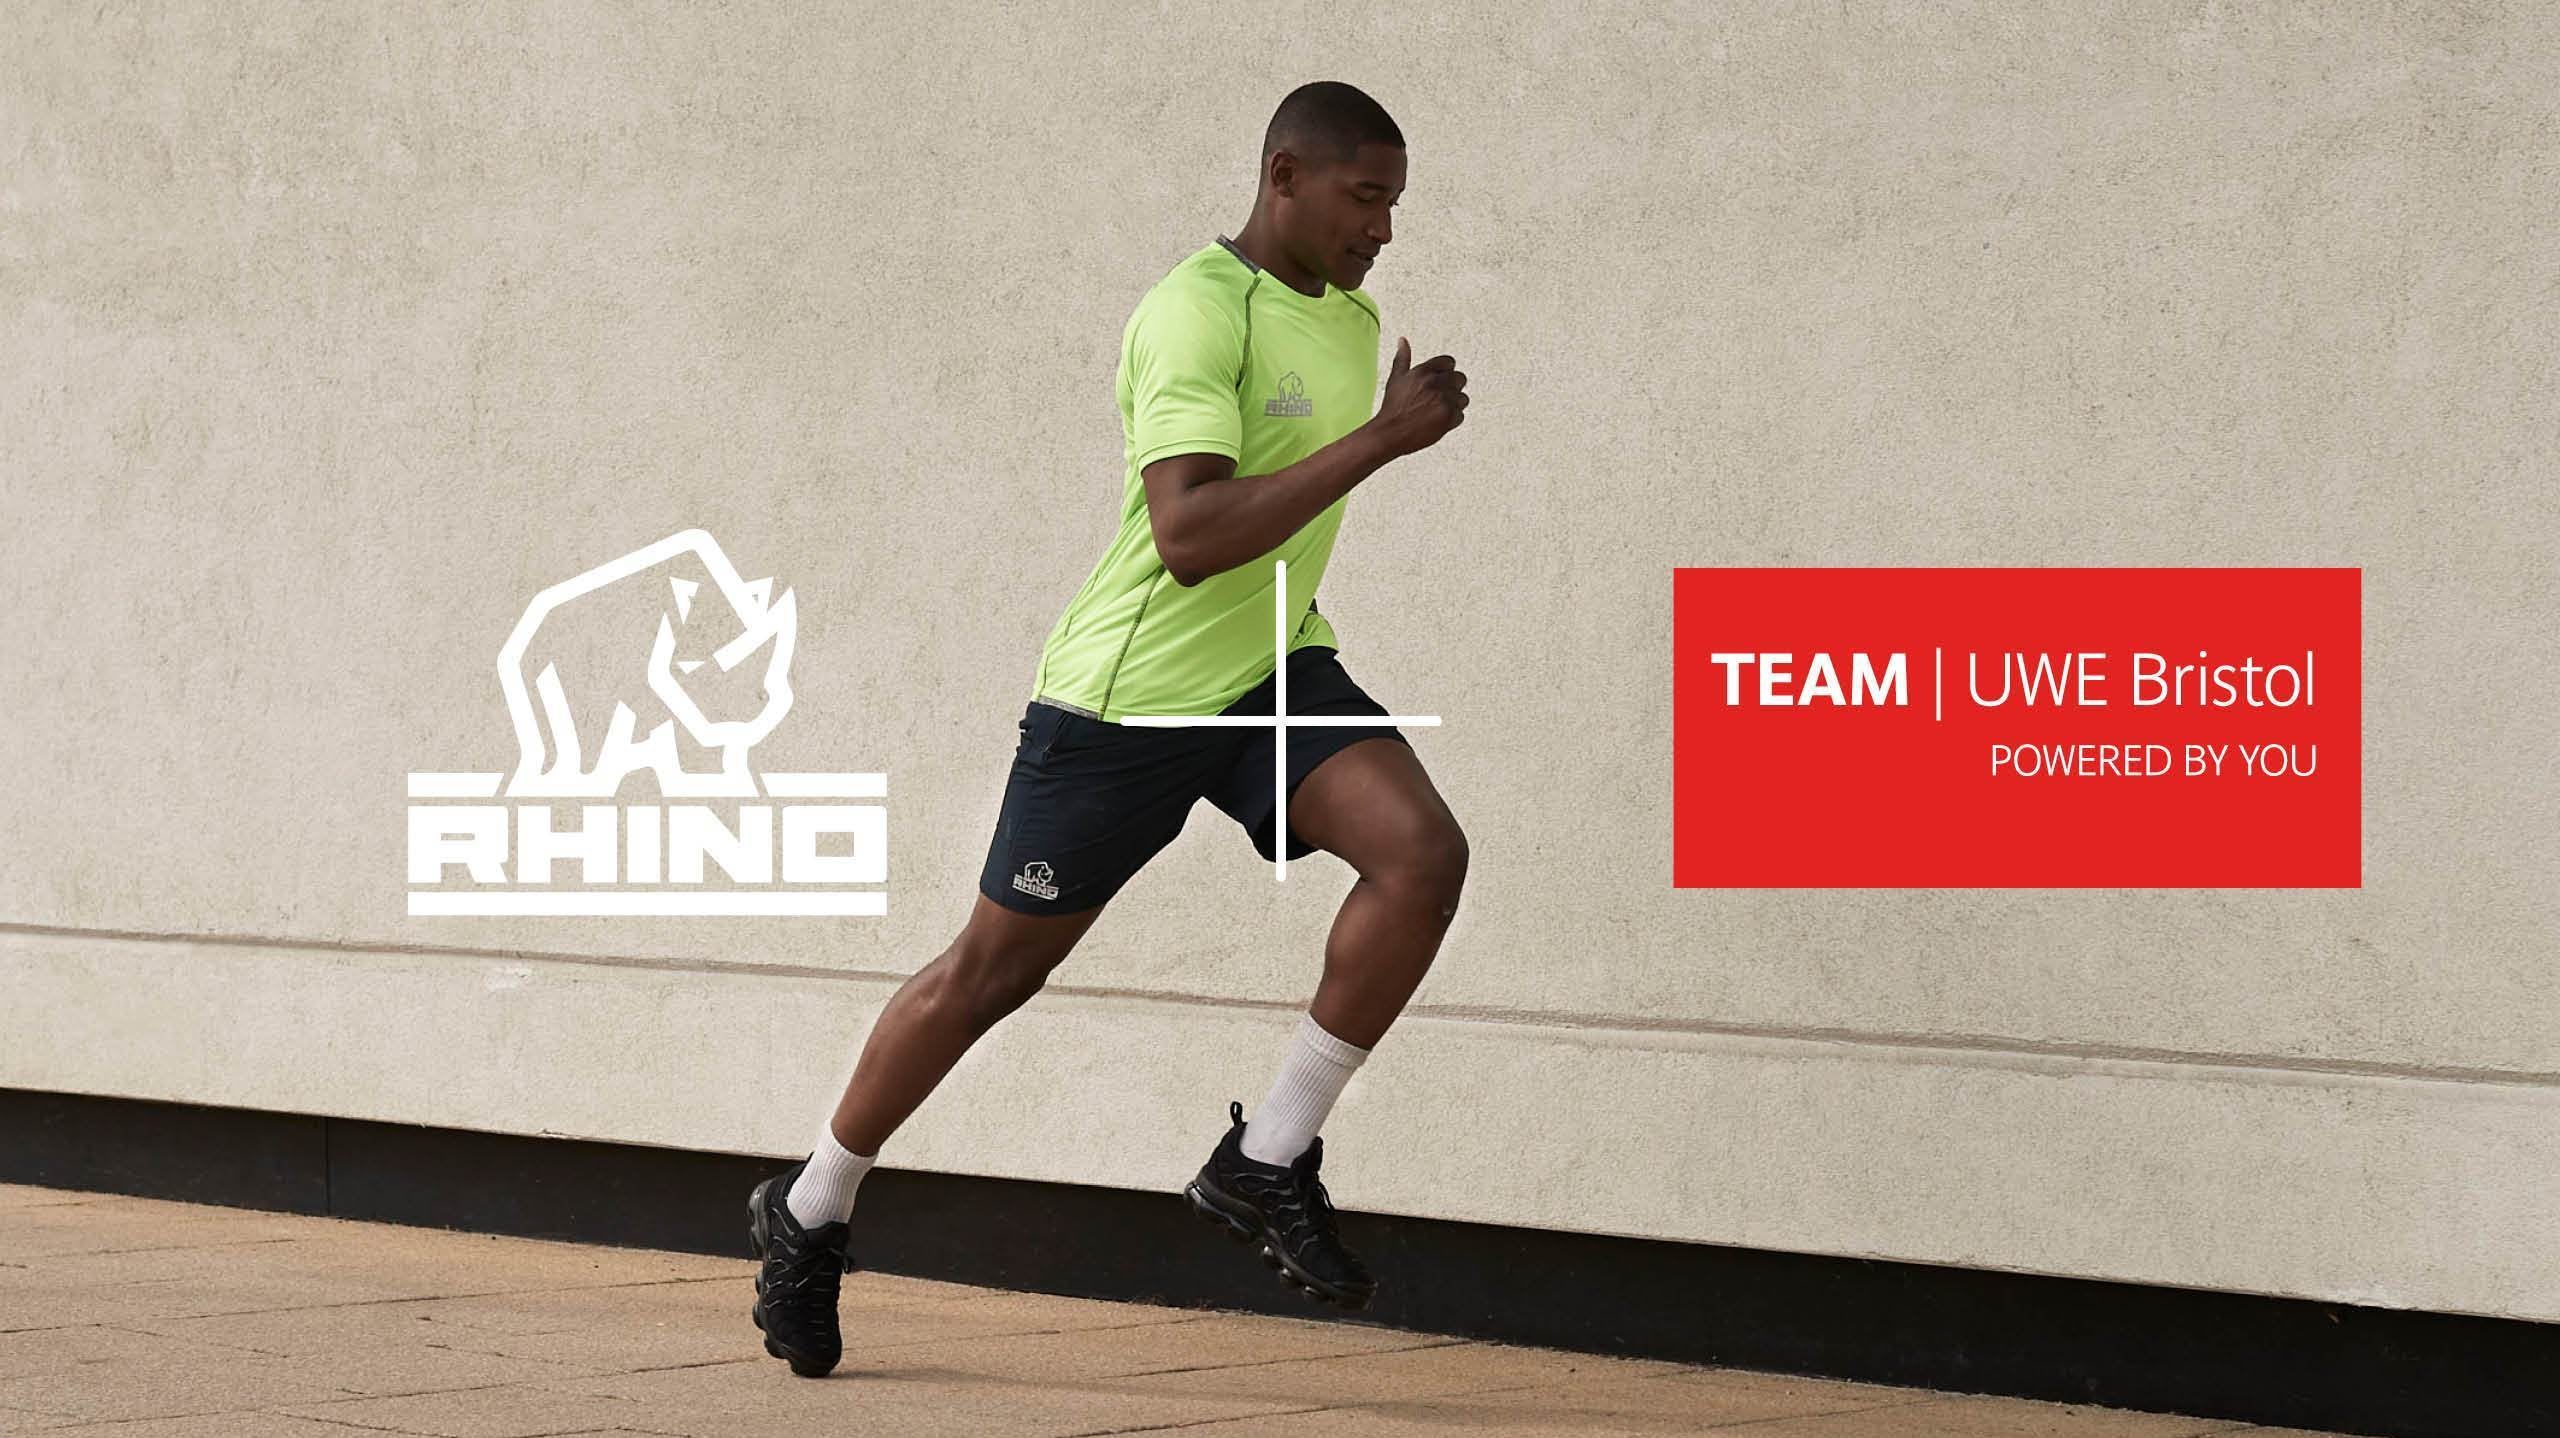 TEAM | UWE Bristol selects Rhino to supply teamwear across all sports